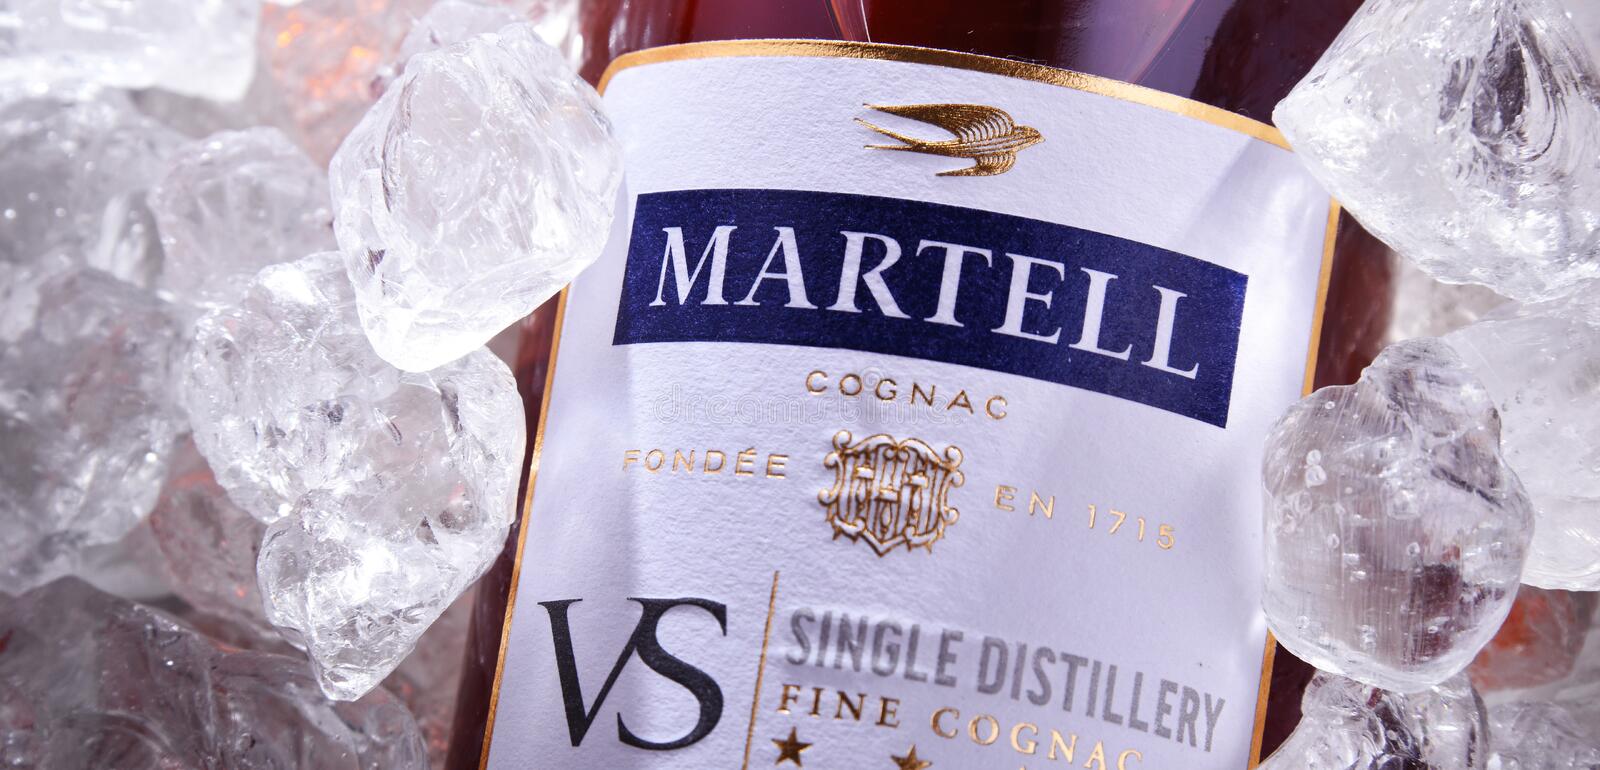 Martell Botella Cognac